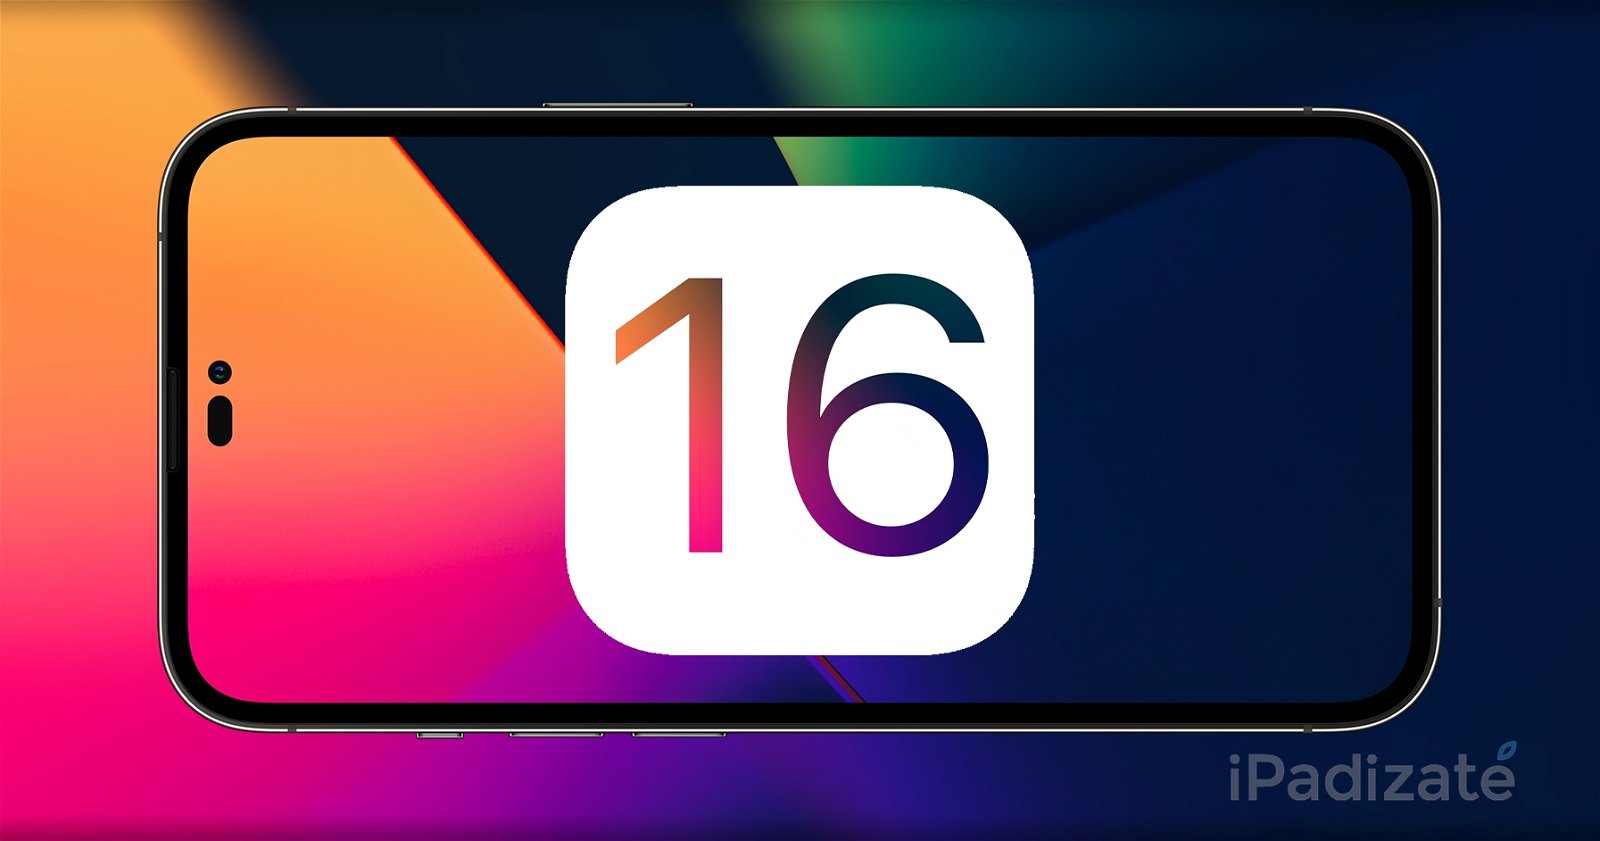 iOS 16 on iPhone 14